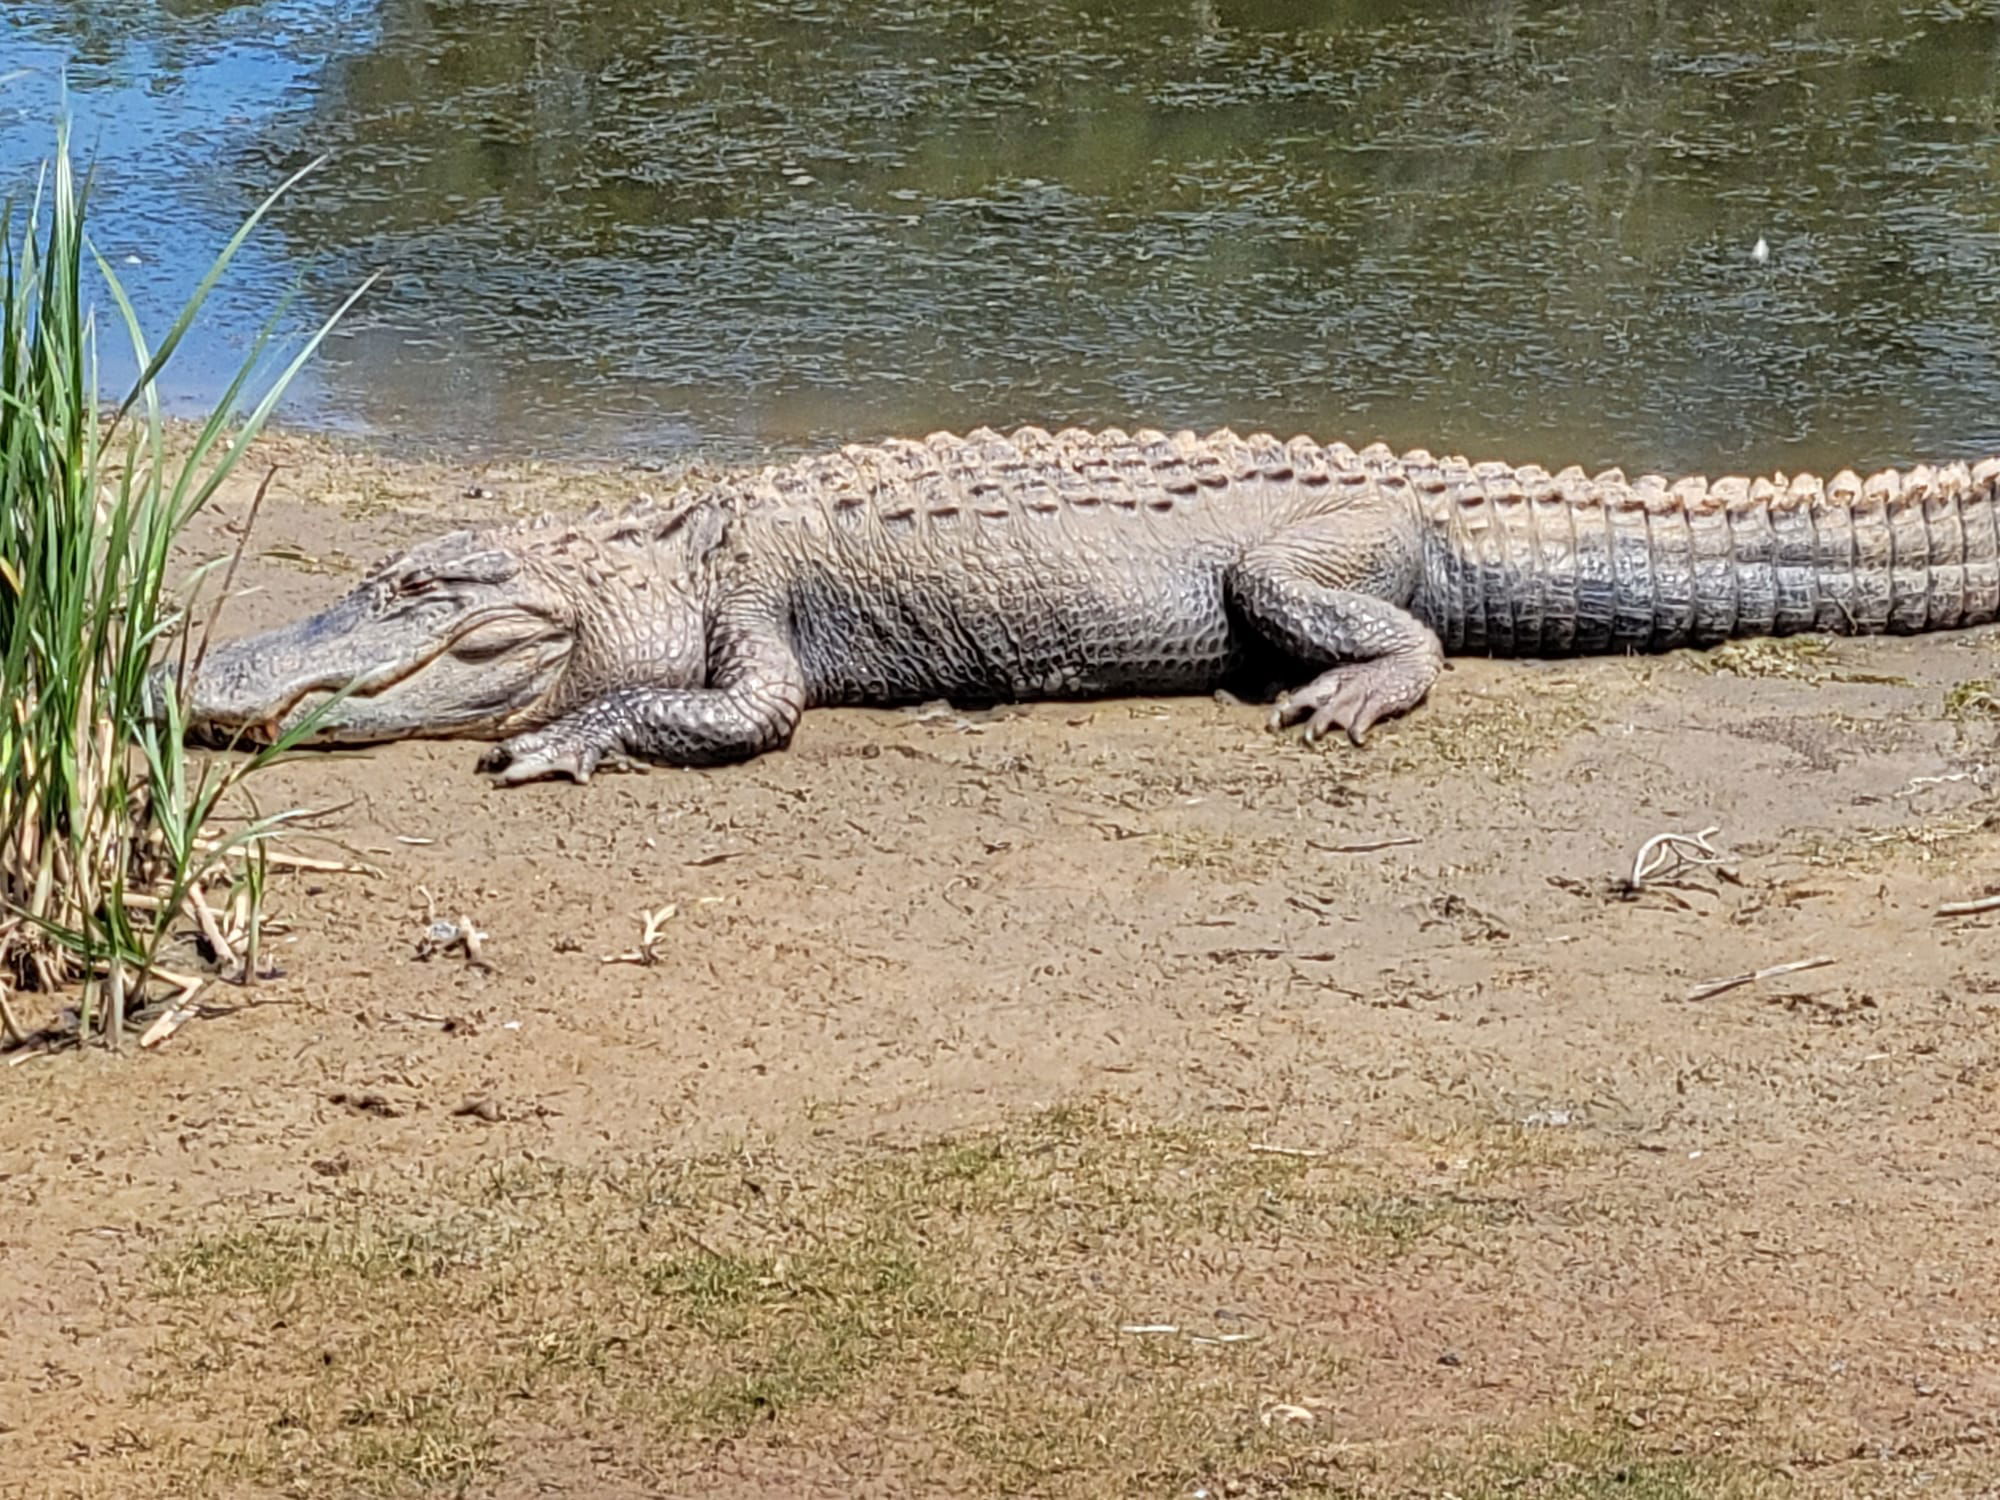 REI Trip: Bulls Island - Alligator Habitat